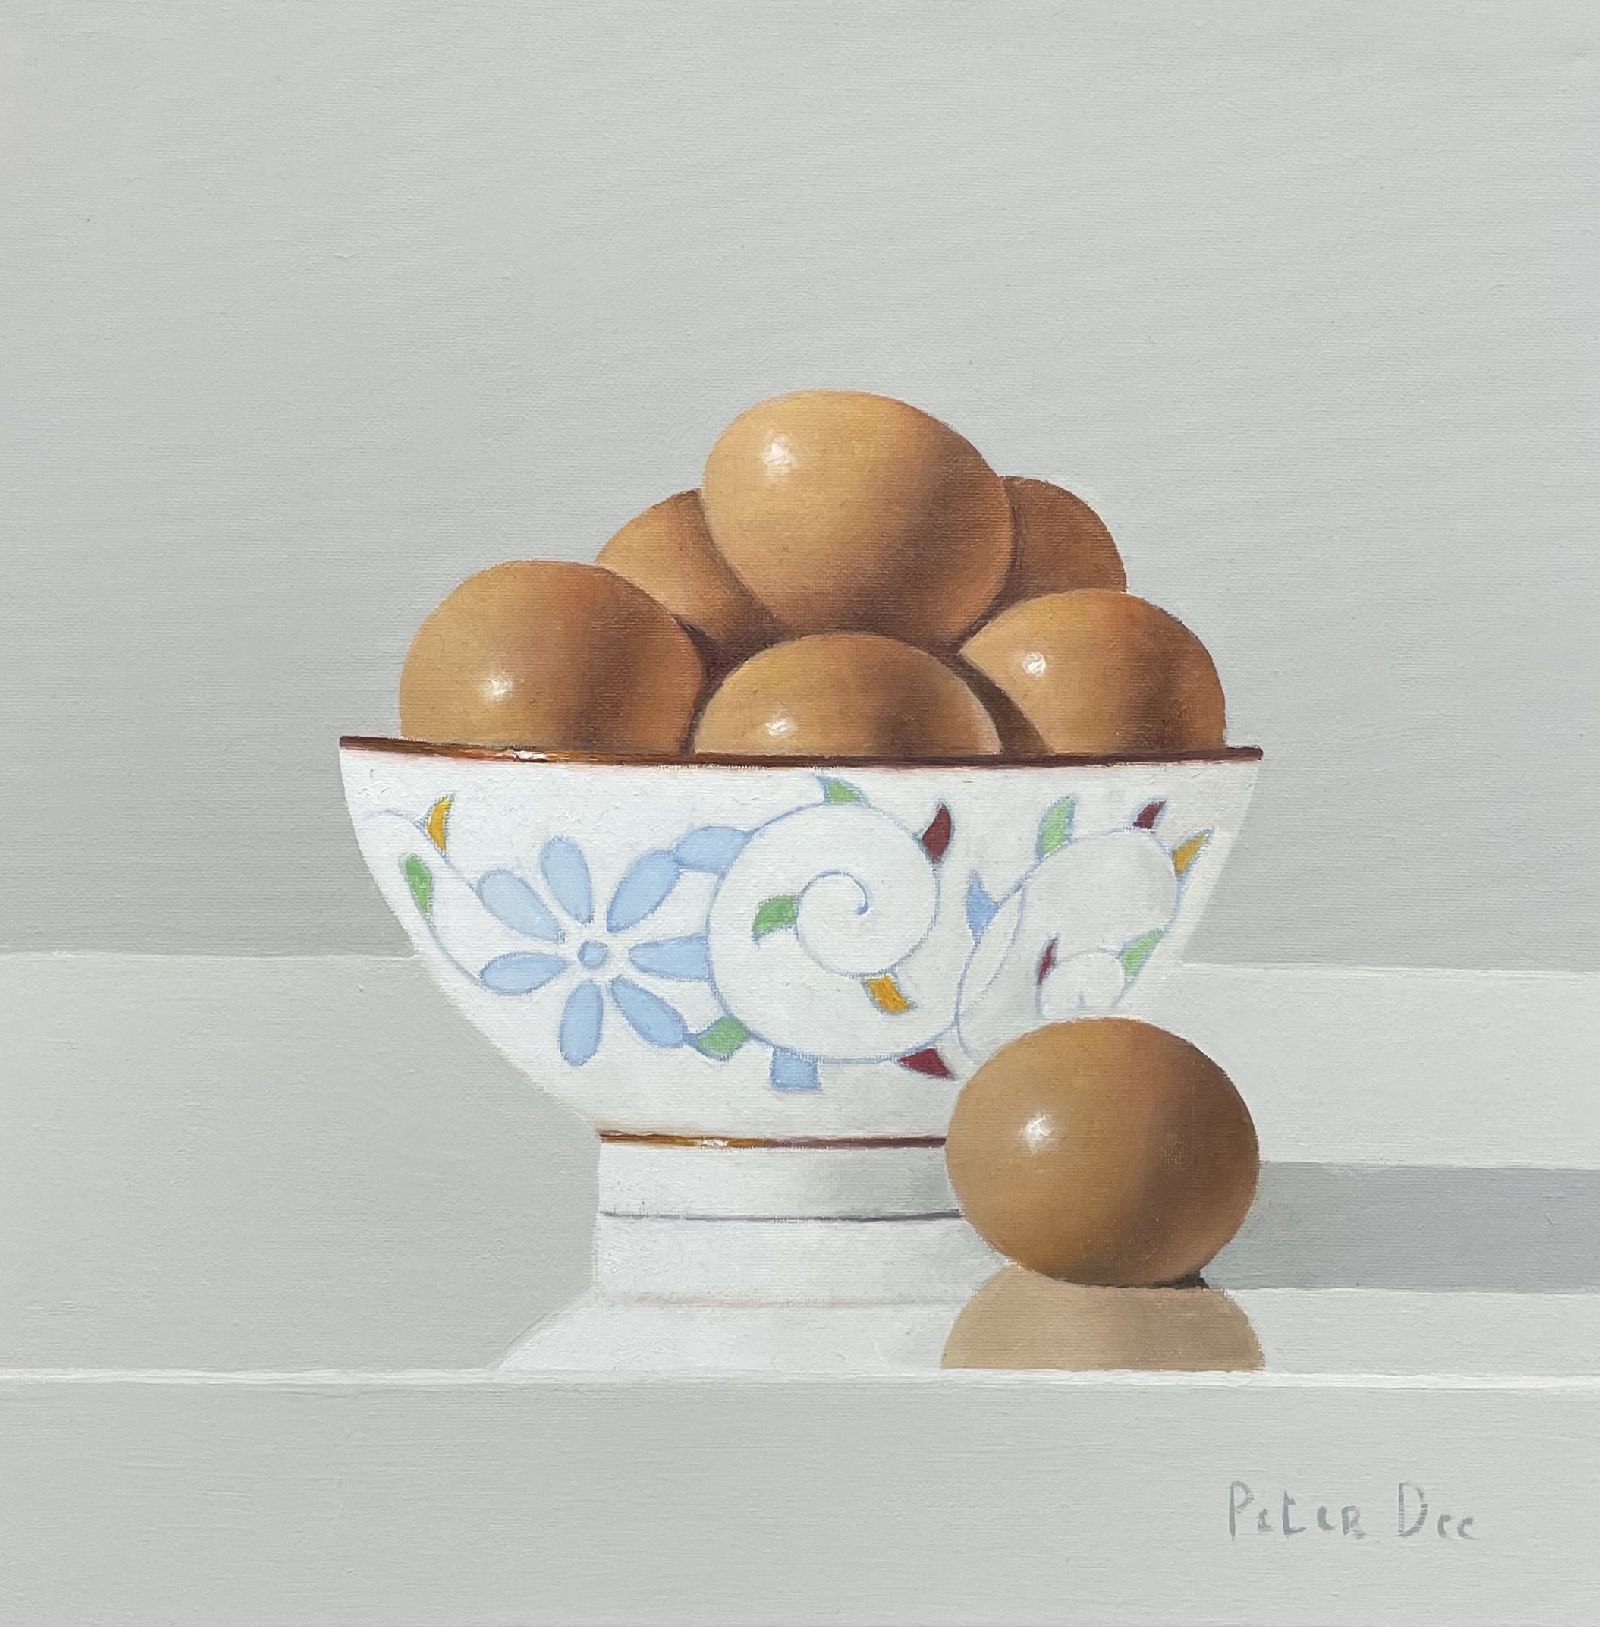 Peter Dee - Bowl of Eggs 